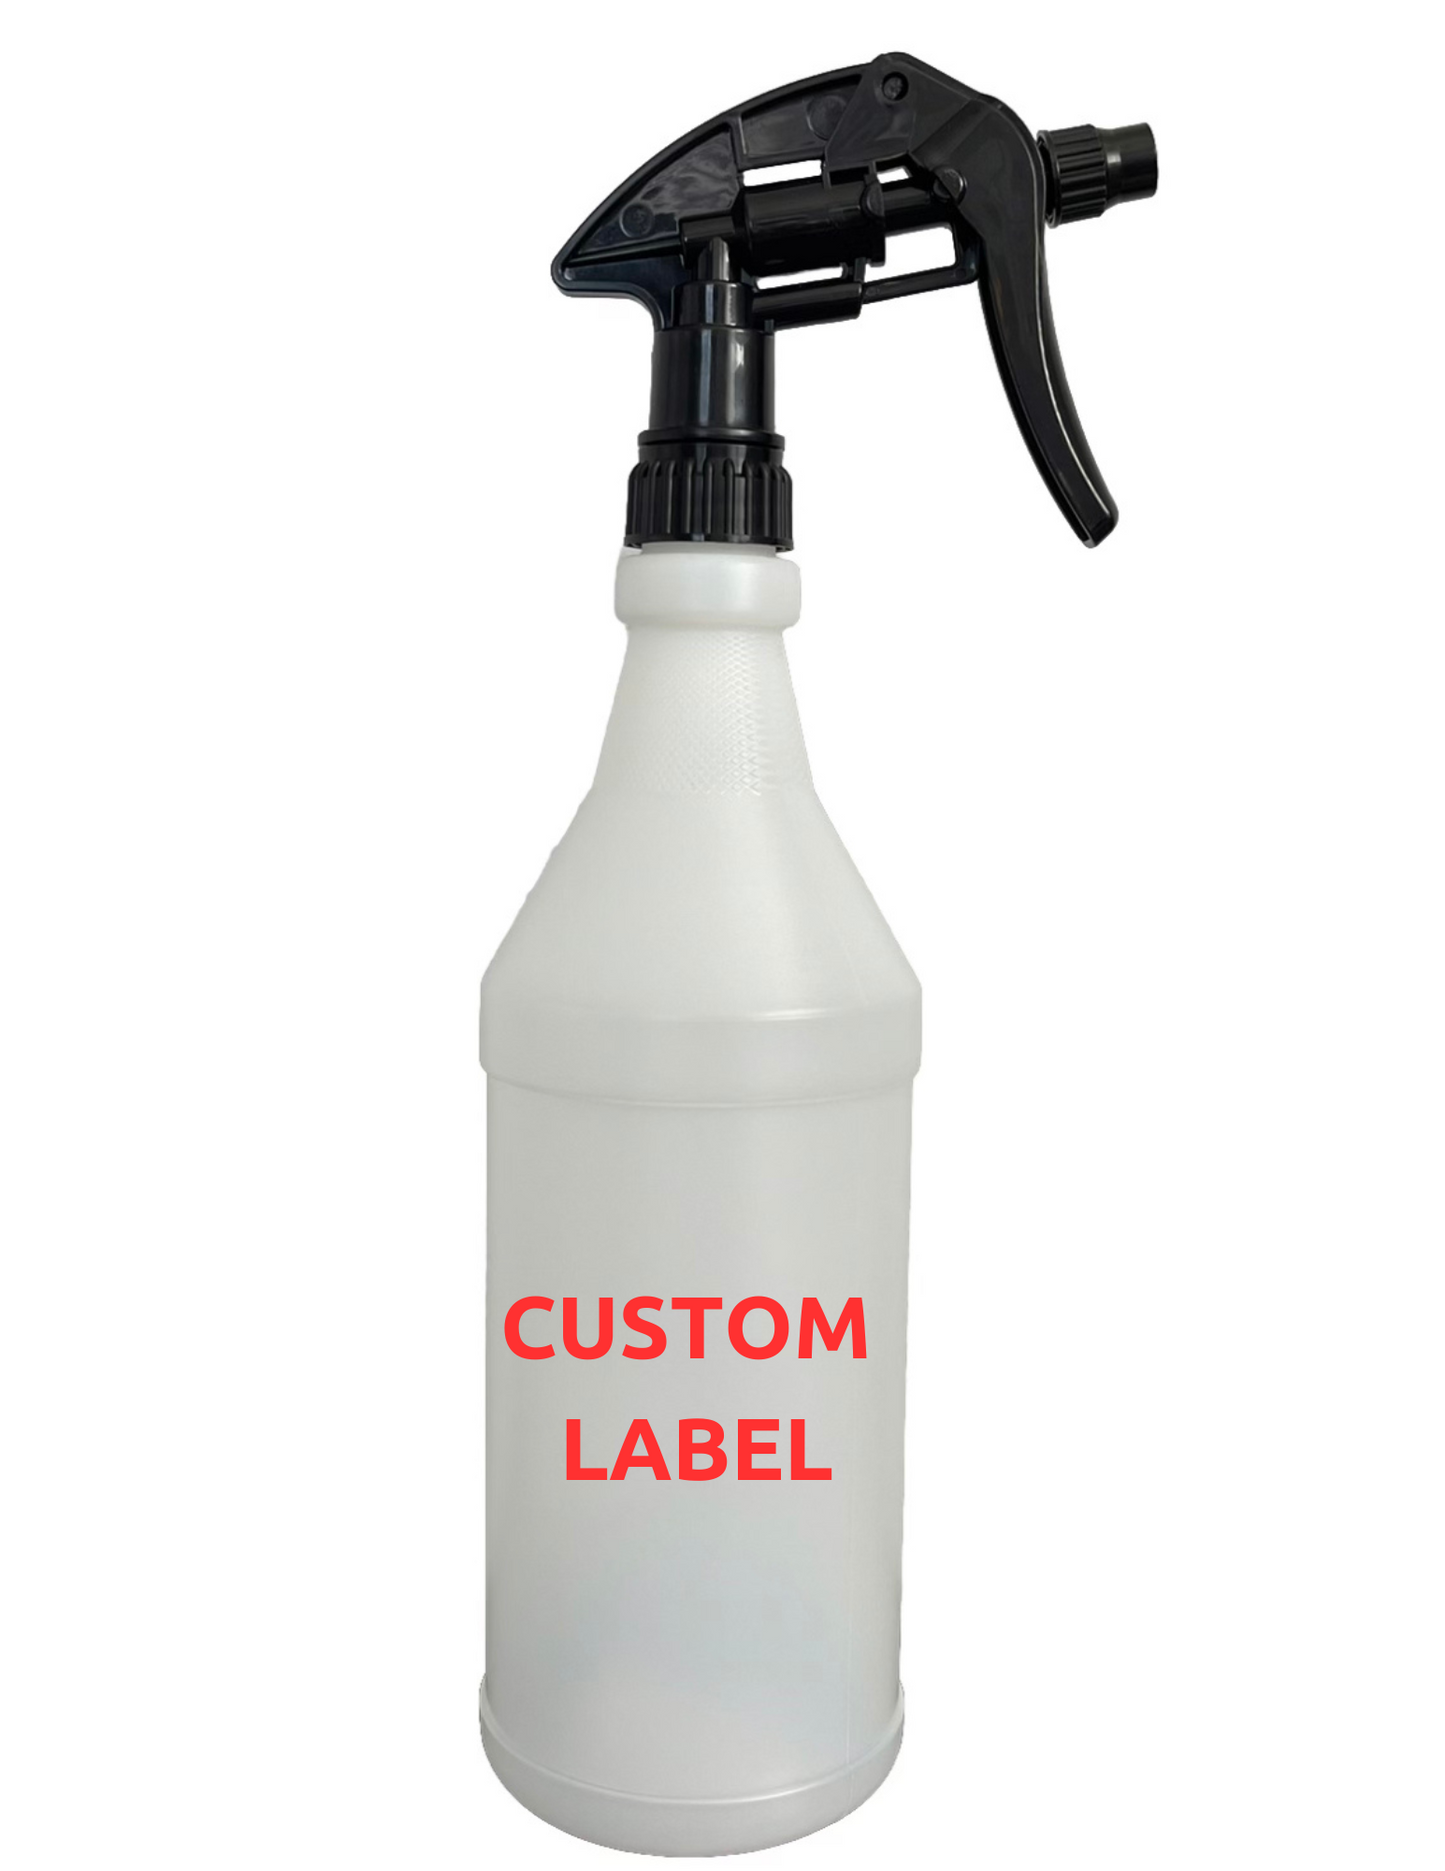 Ace Auto Wash - 32 ounce Spray Bottles - Custom Label (84 Units)